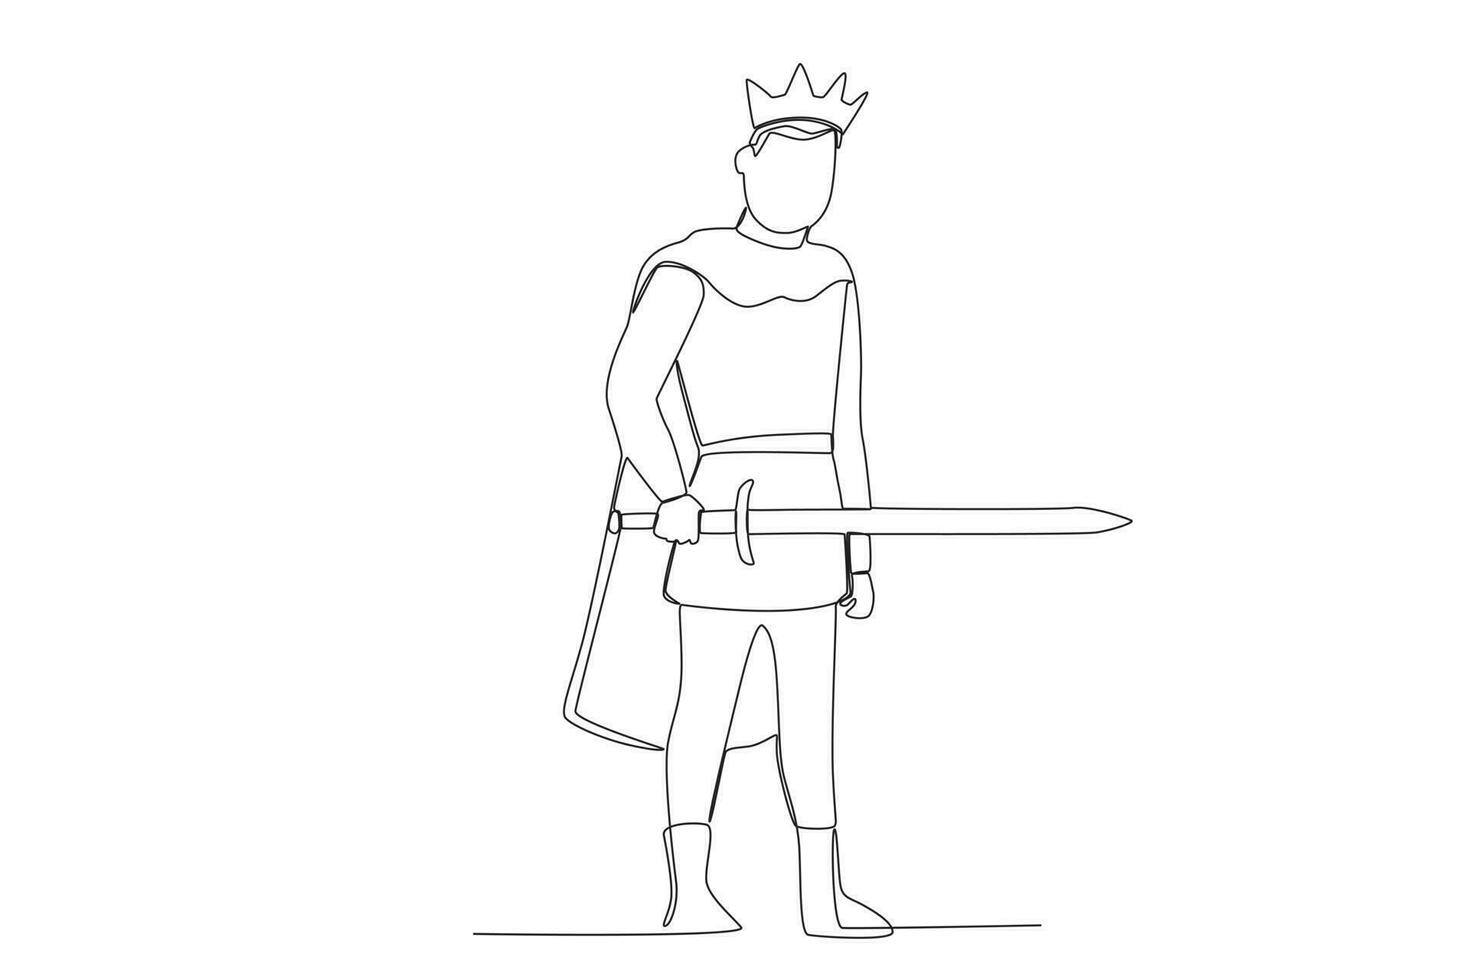 A king holding a sword vector